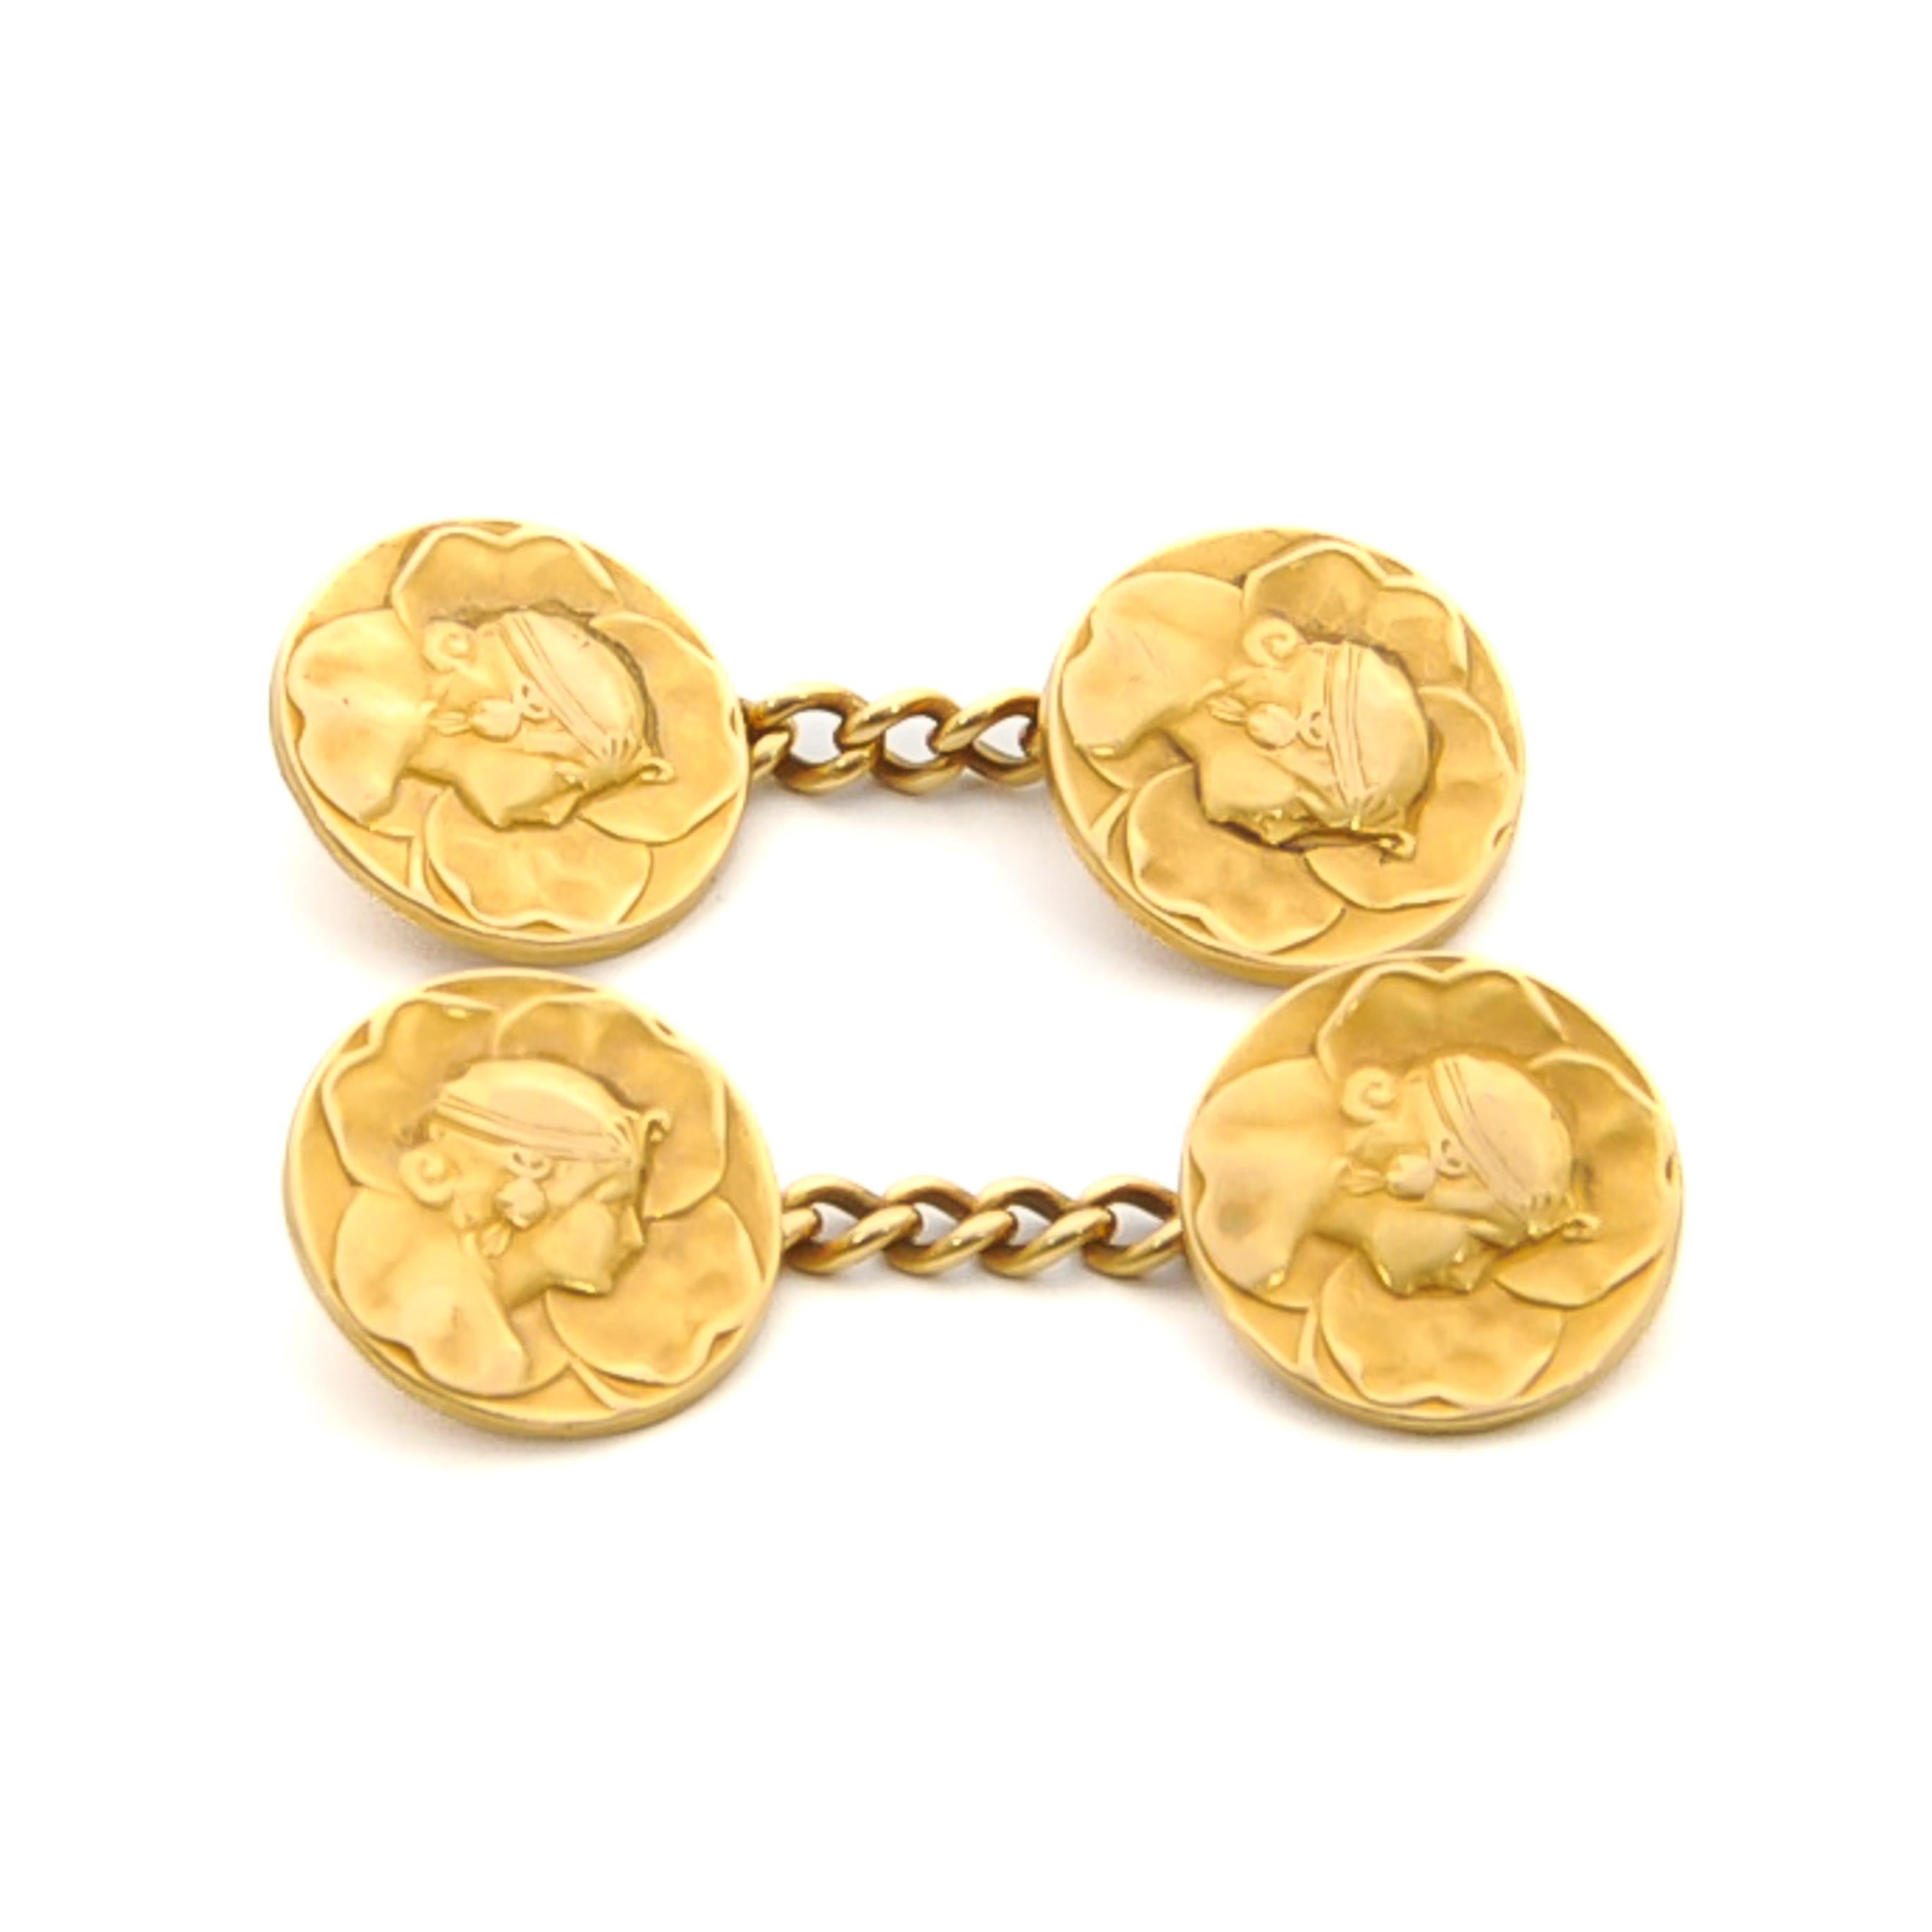 Antique Art Nouveau 18K Gold Carved Cuff Links For Sale 2